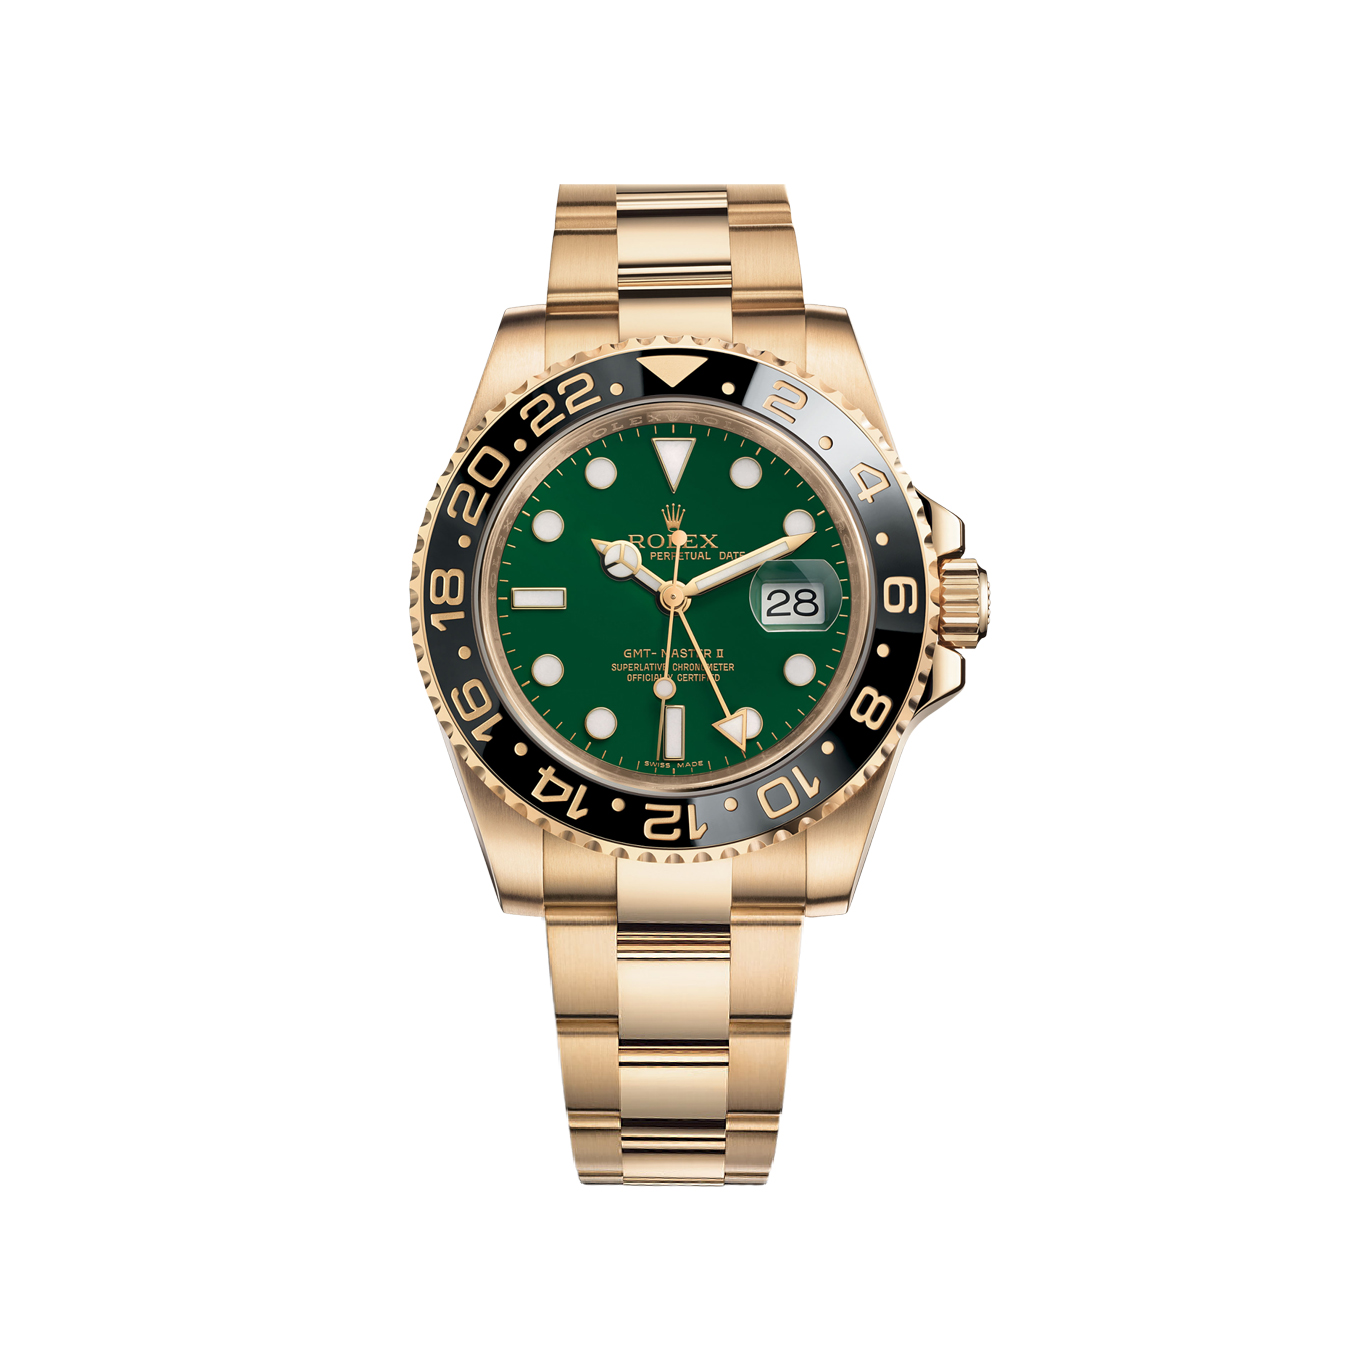 GMT-Master II 116718LN Gold Watch (Green)